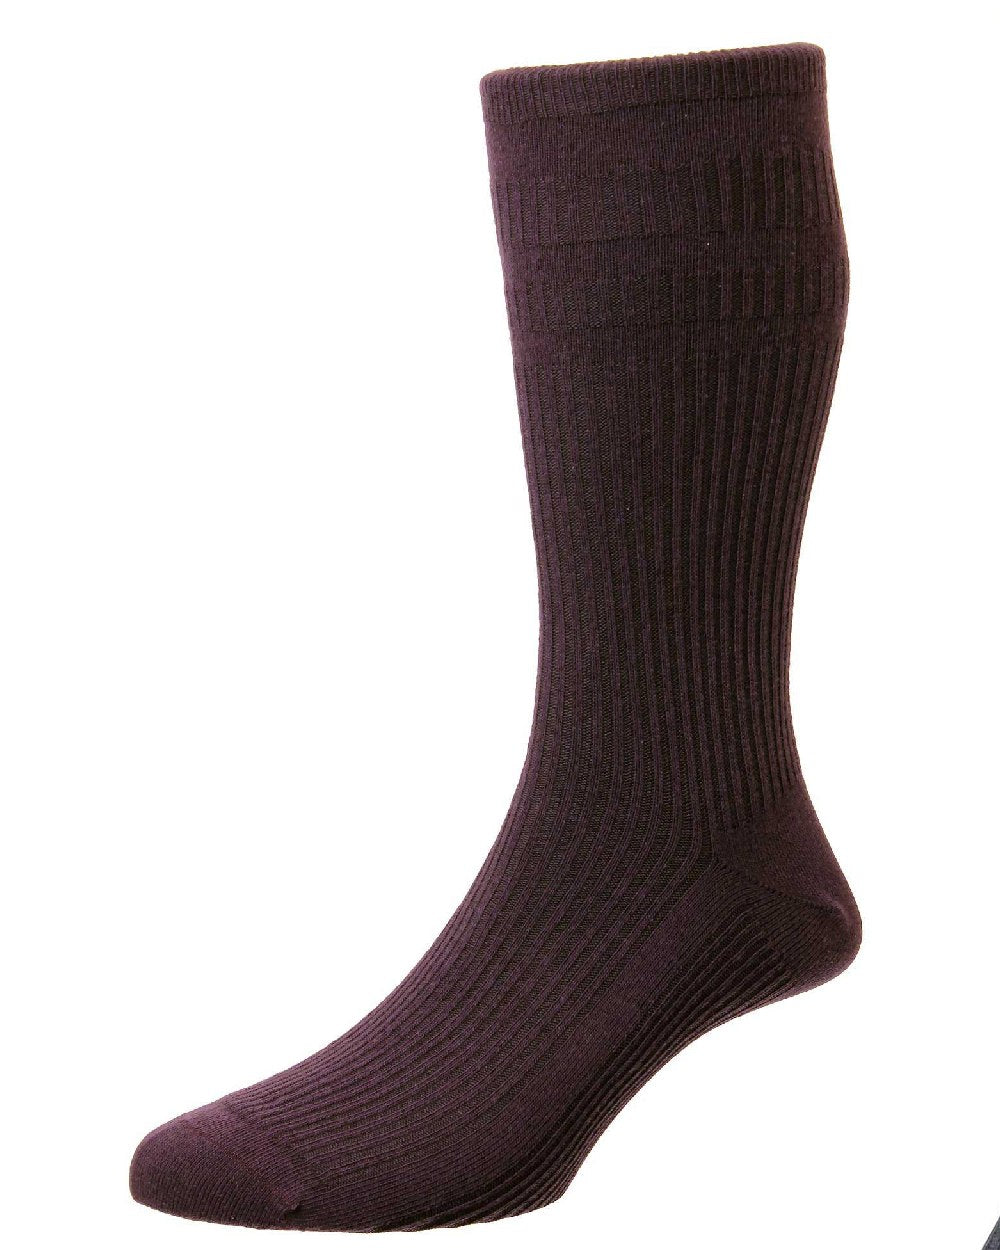 HJ Hall Original Cotton Soft Top Socks in Damson 